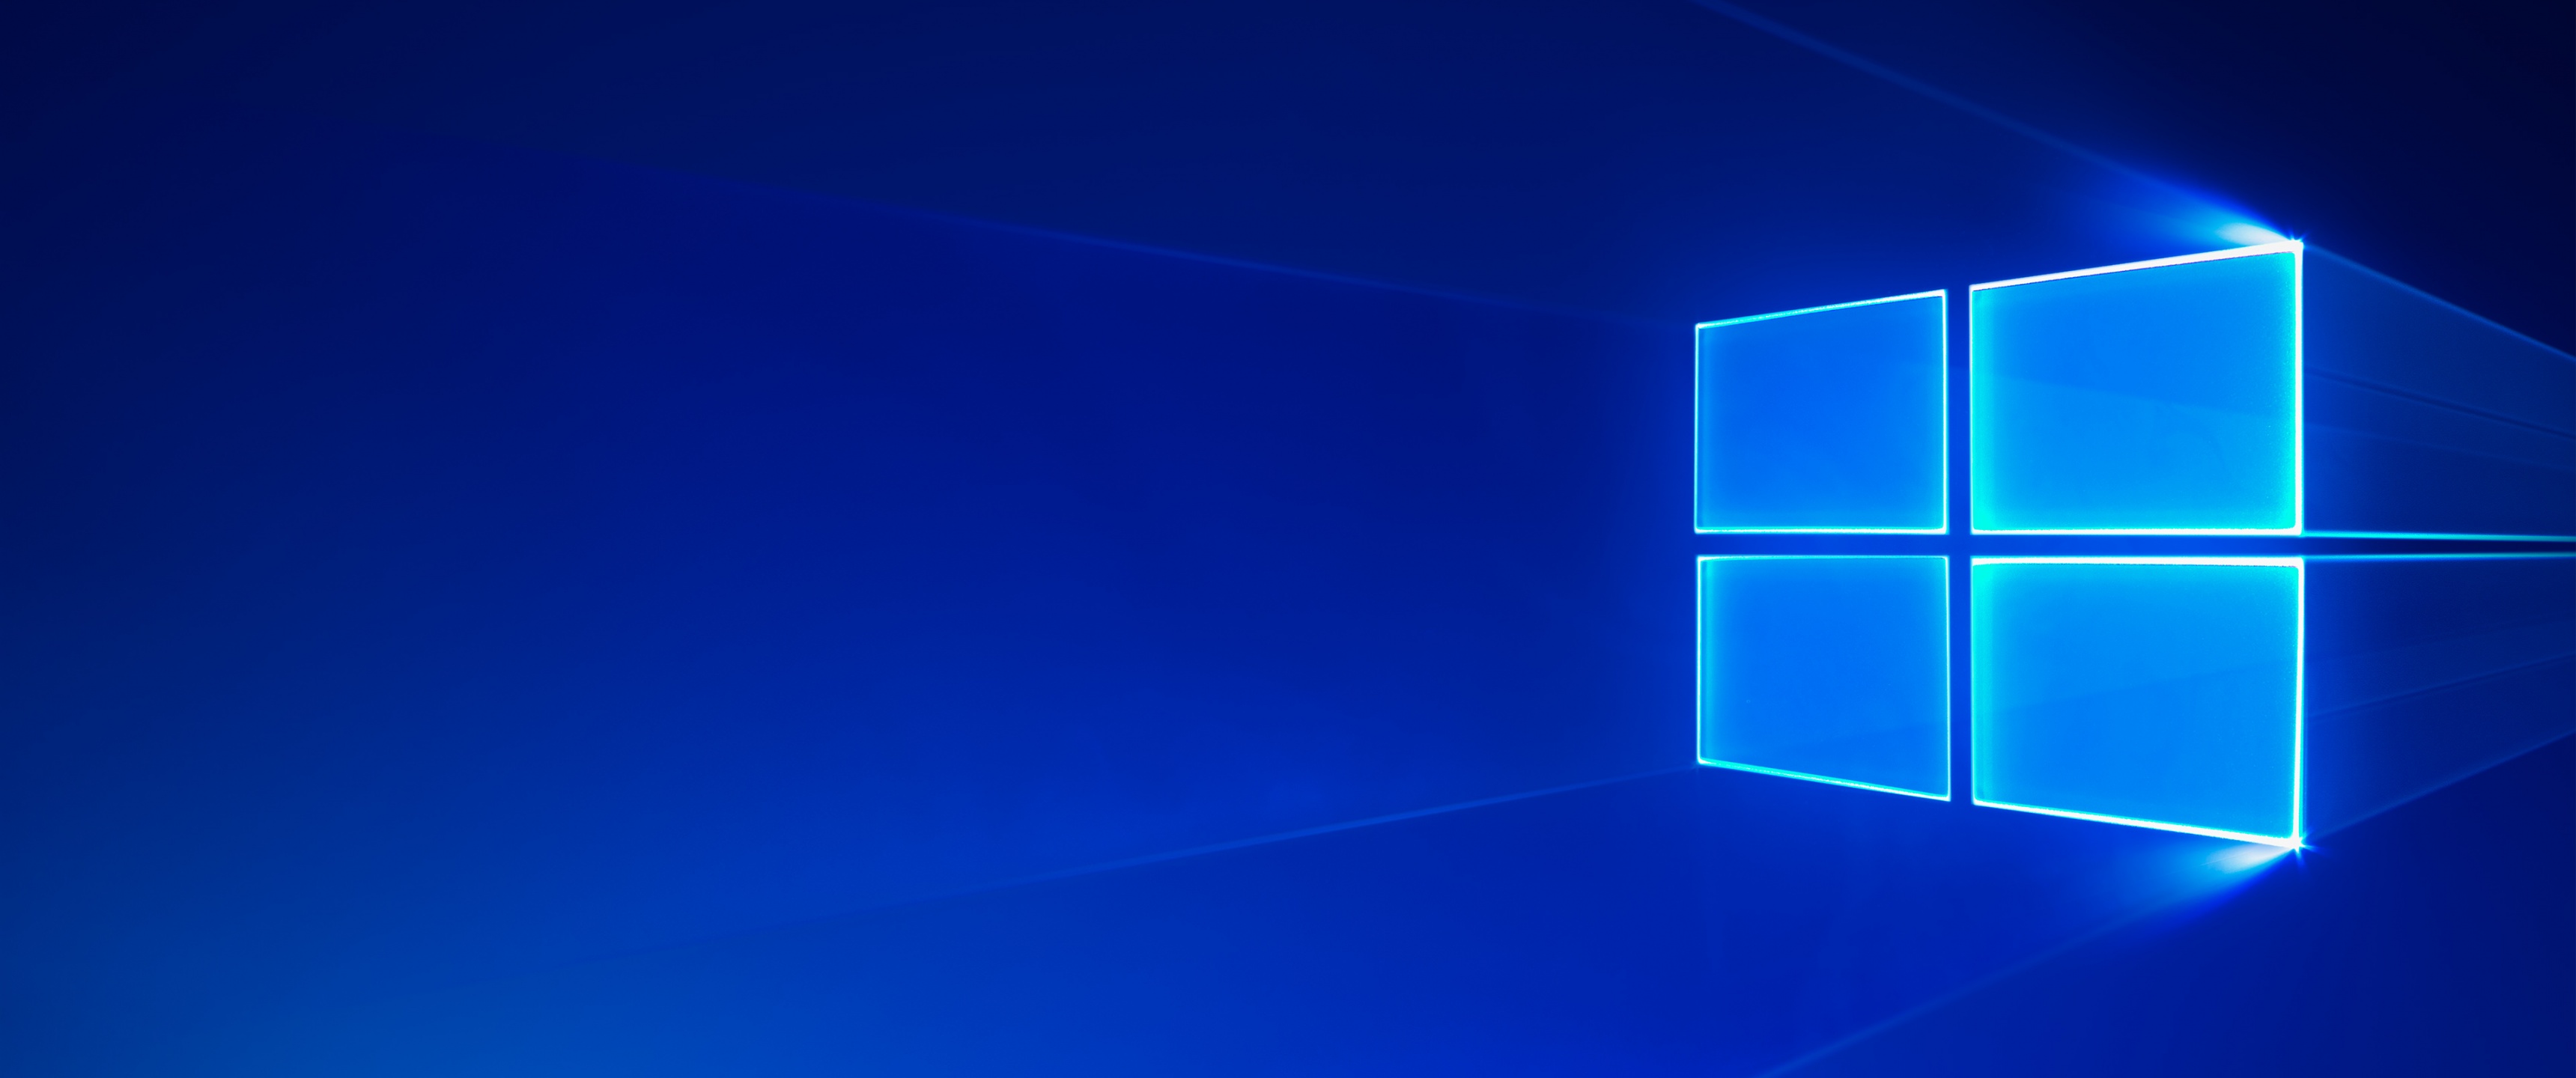 Windows 10 Wallpaper 4K, Microsoft Windows, Blue, Technology, #1555